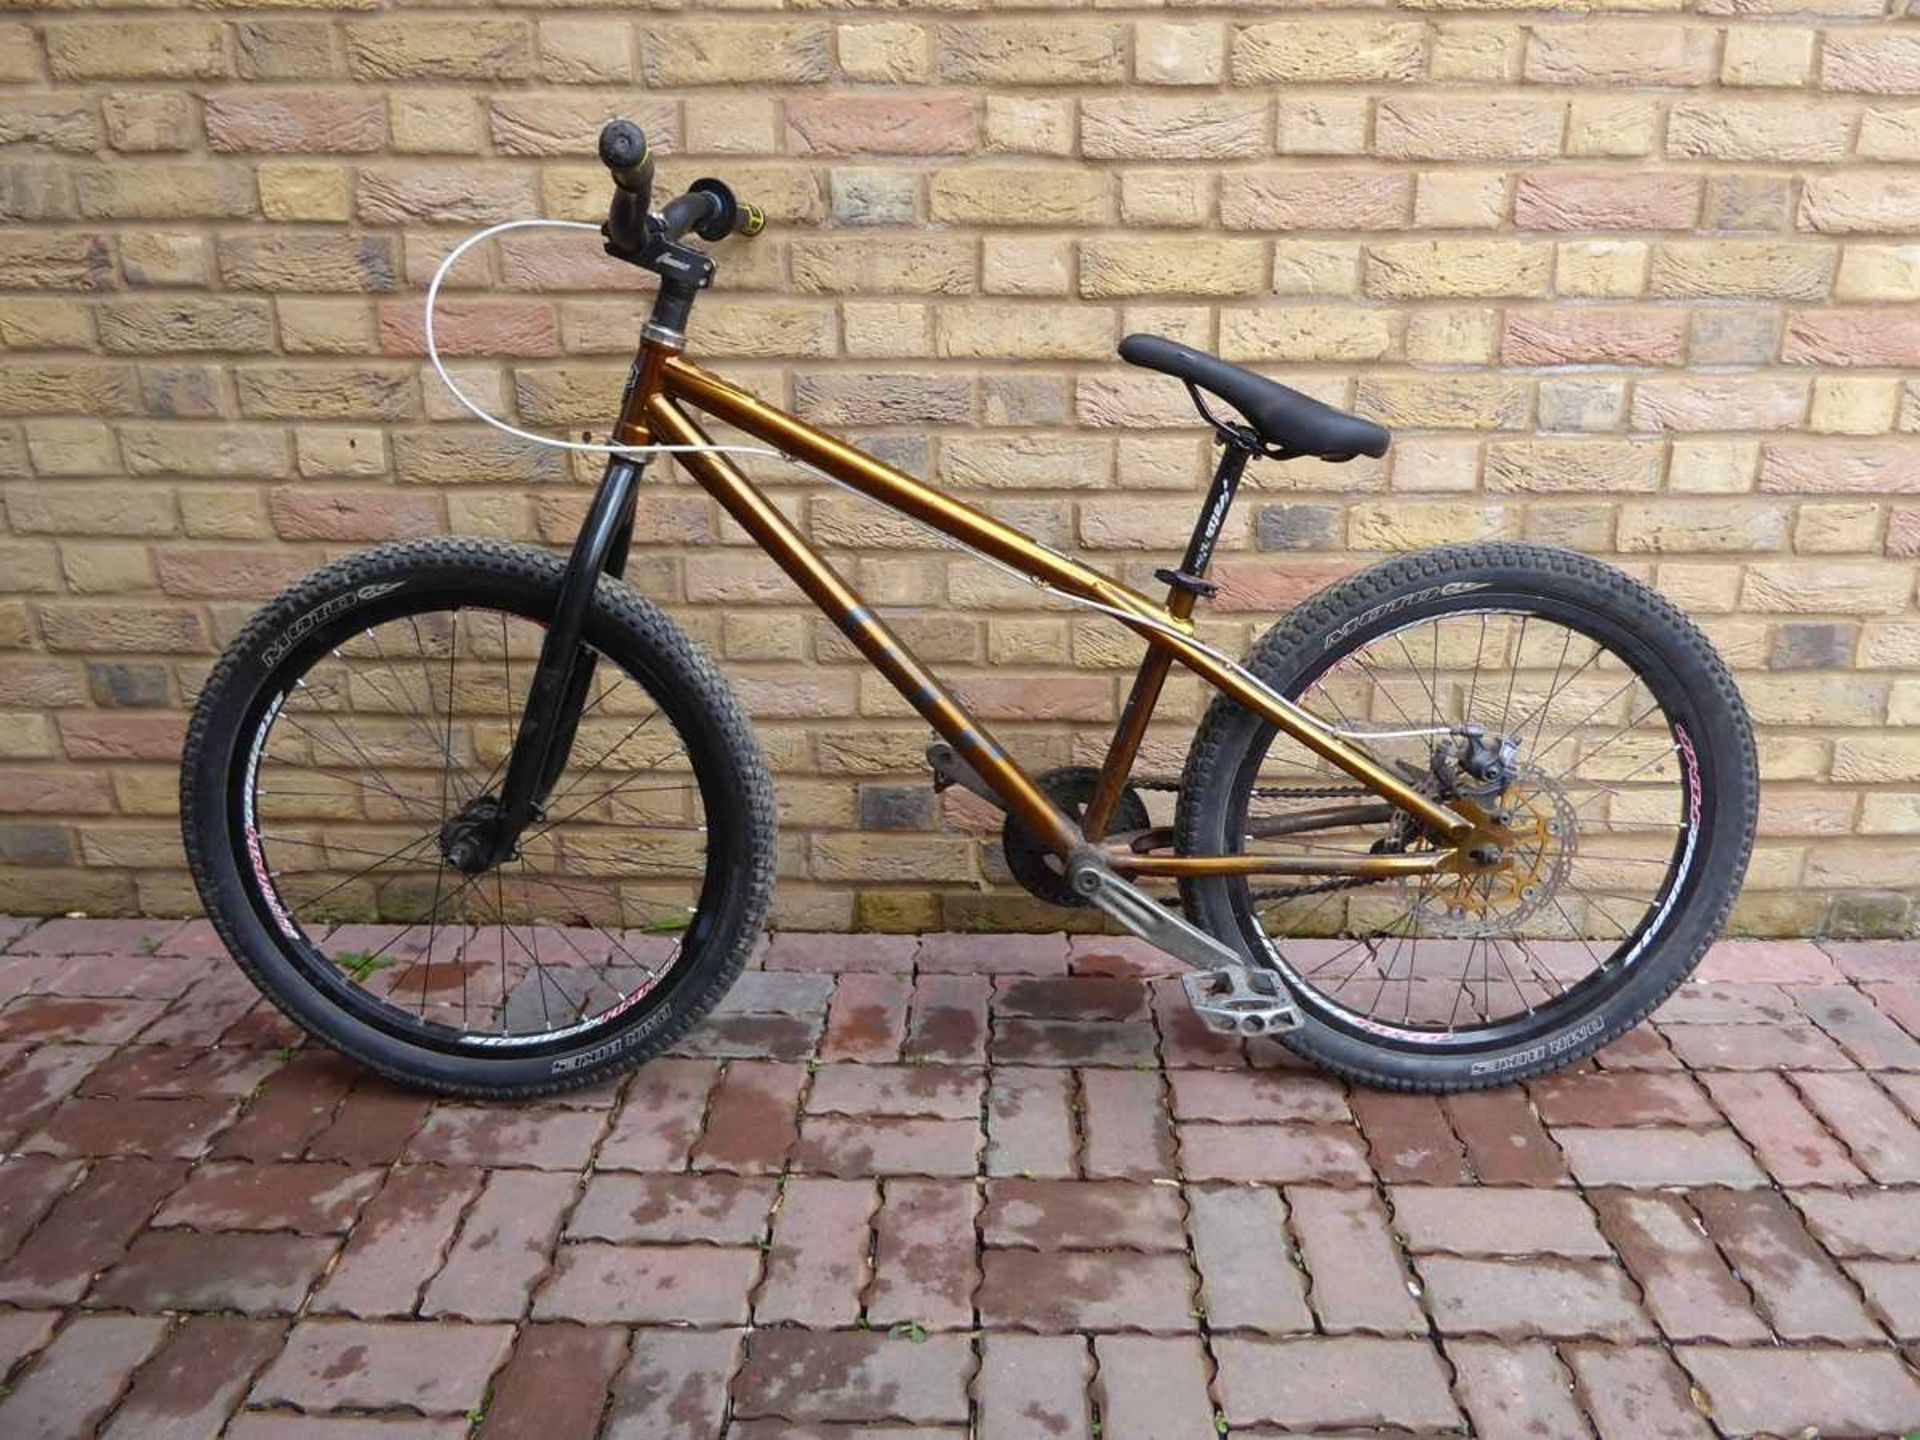 Ruckus UF Urban Free Ride/ Dirt Jump bike in gold